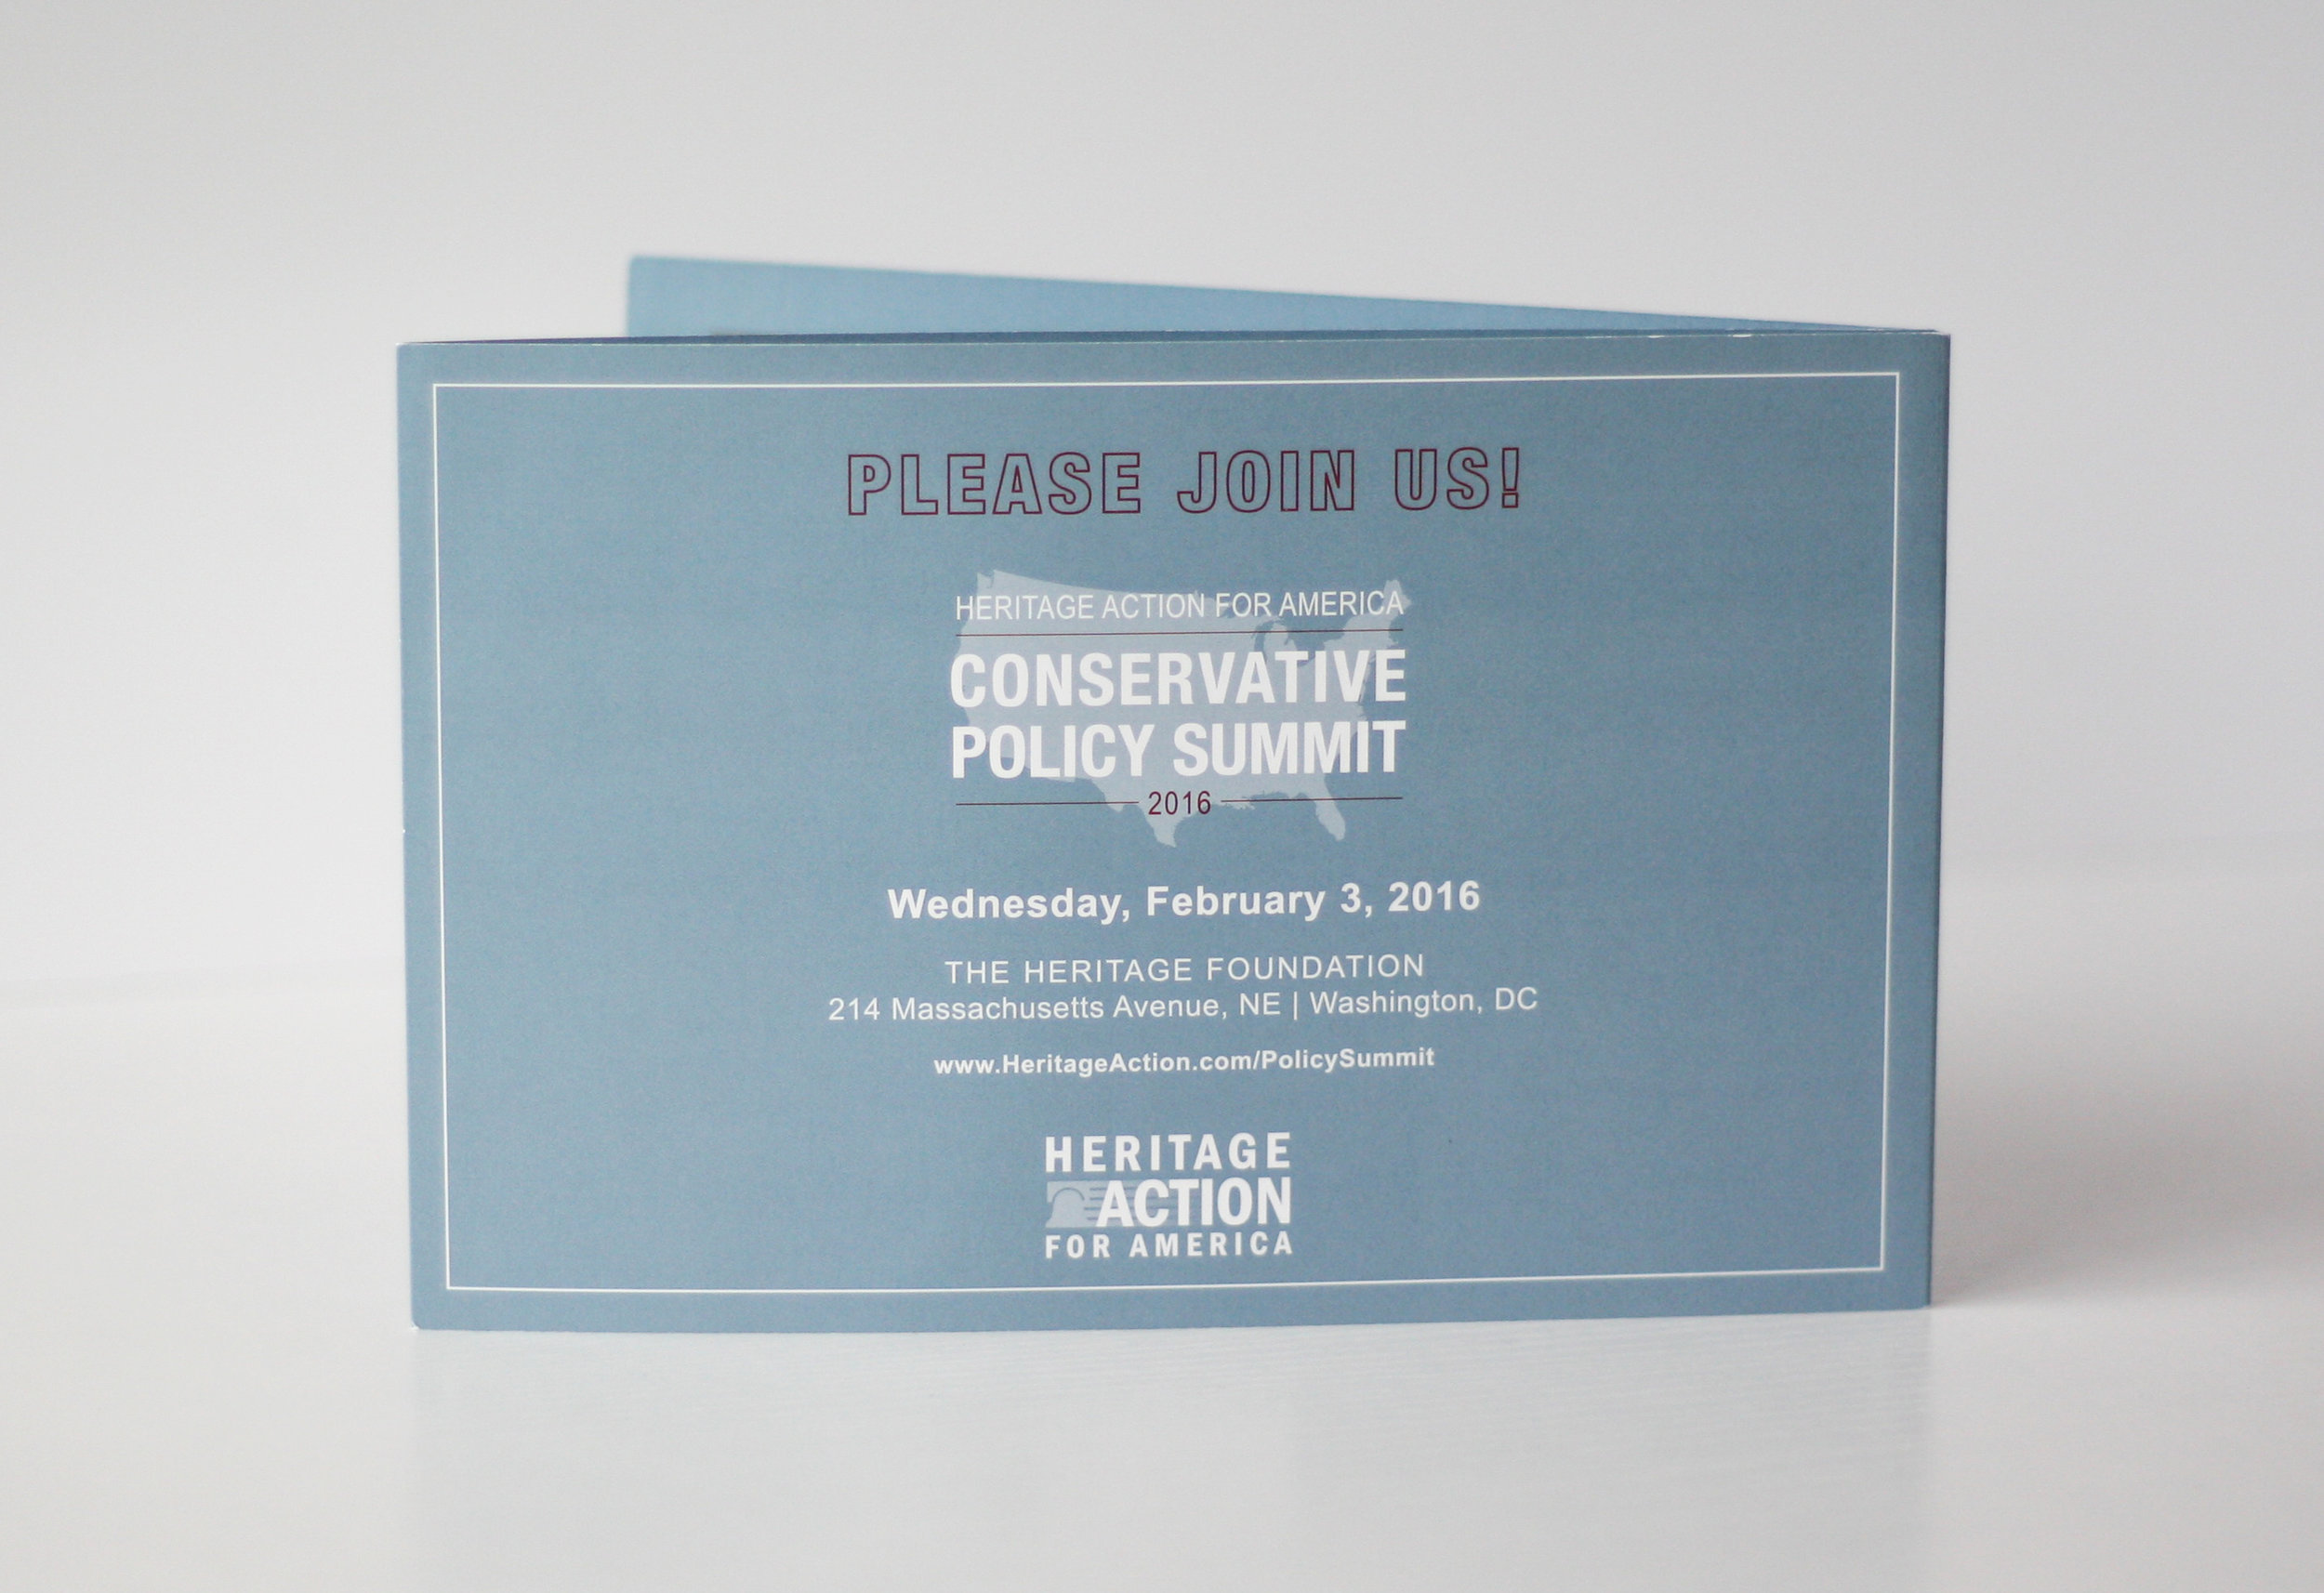 Conservative Policy Summit Corporate Event Invitation | Casi Long Design | casilong.com:portfolio | #casilongdesign #fearlesspursuit 7.jpg